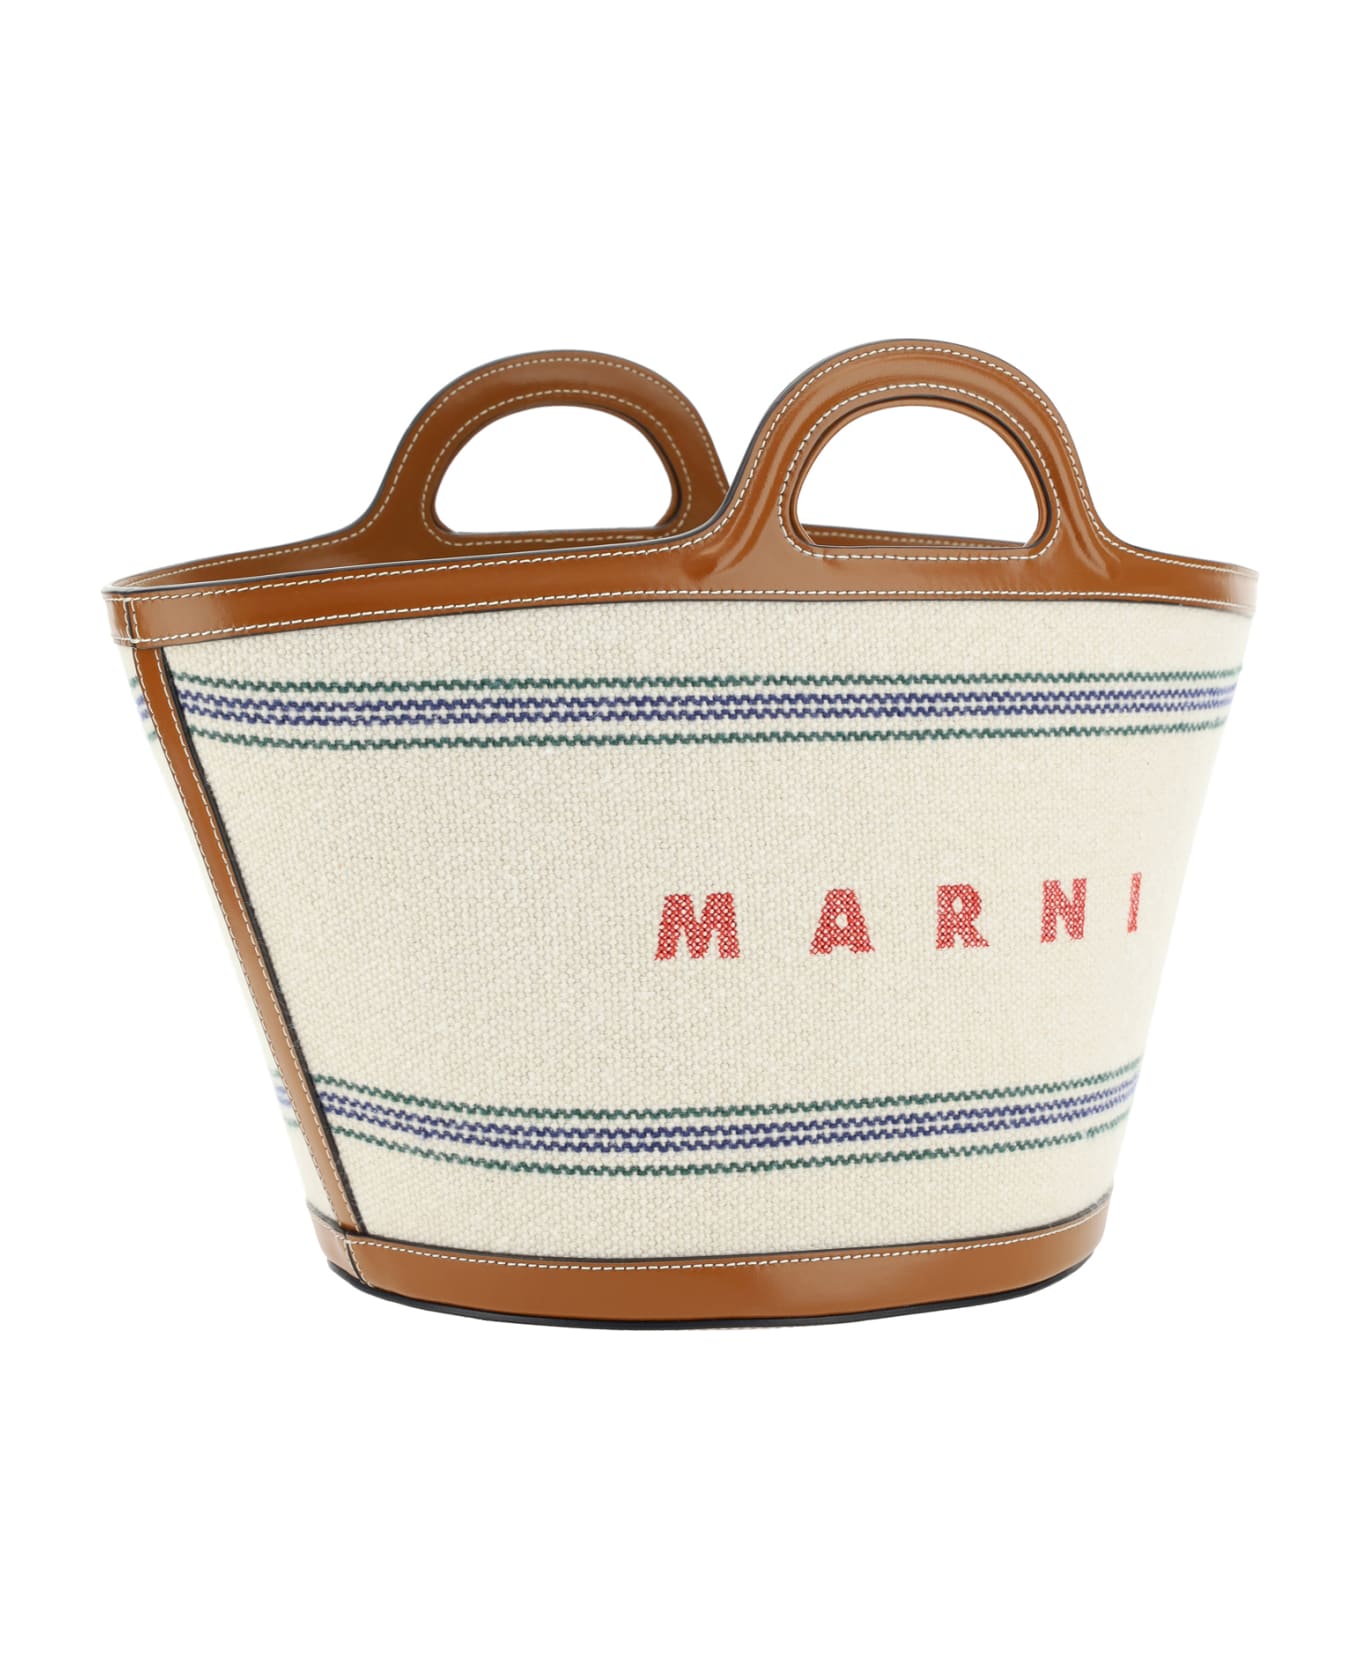 Marni Tropicalia Handbag - NEUTRALS/BROWN